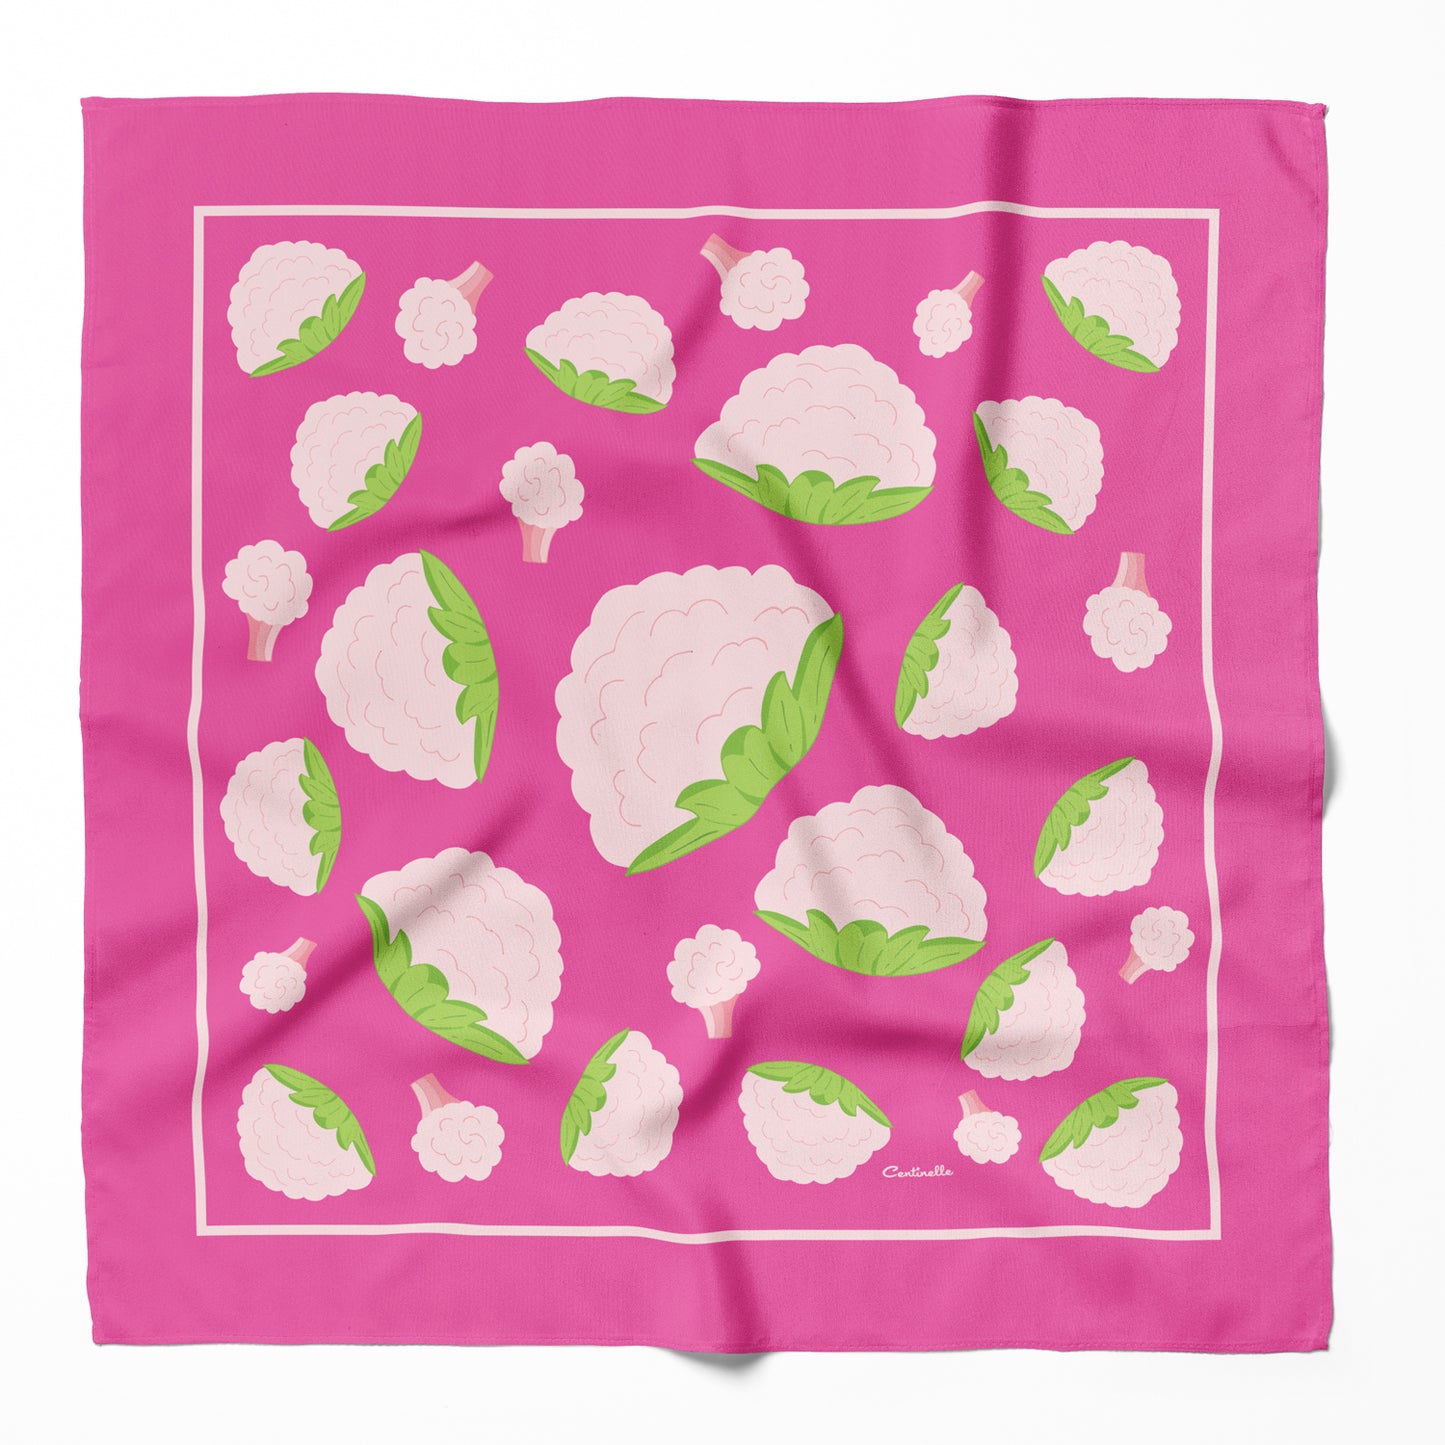 Multiple cauliflower on a pink silk bandana.